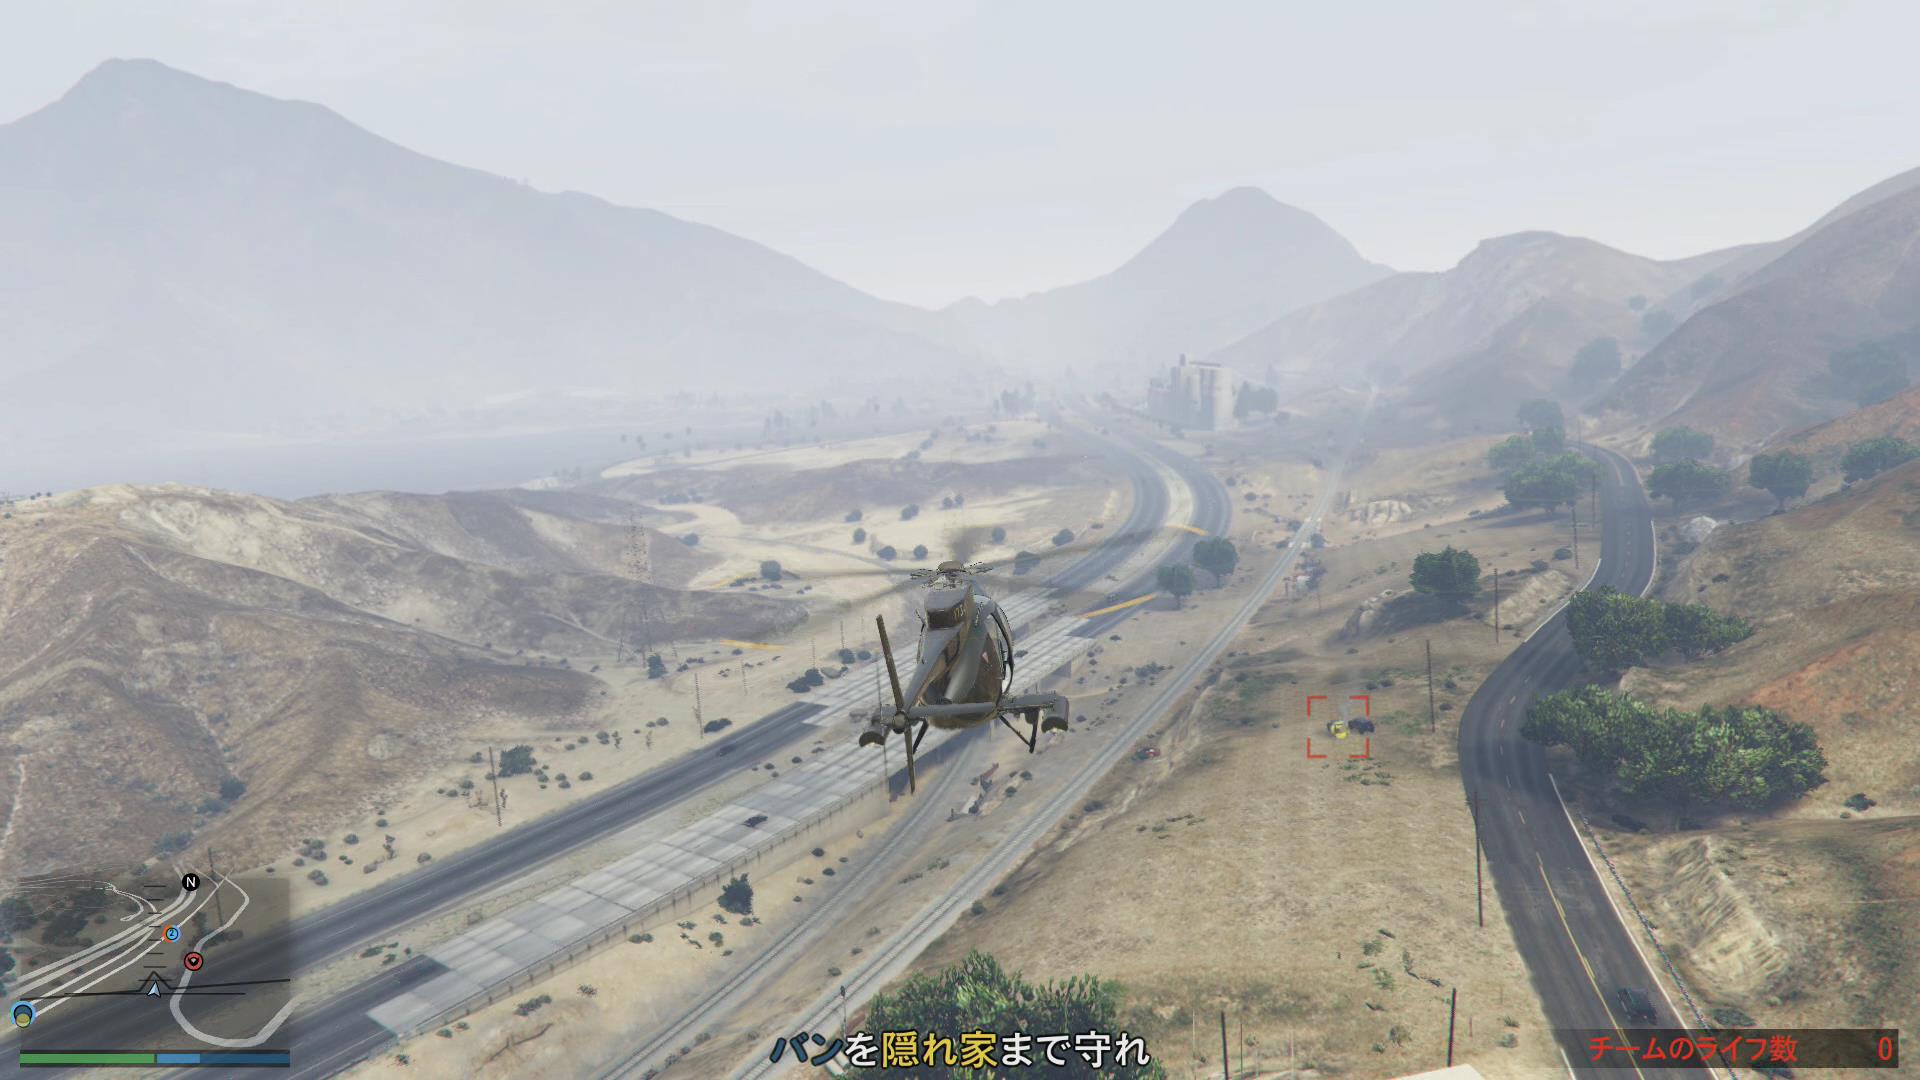 Gtao連載 お値段175万ドル 最強のヘリ バザード攻撃ヘリ で世界が変わった Game Watch Watch